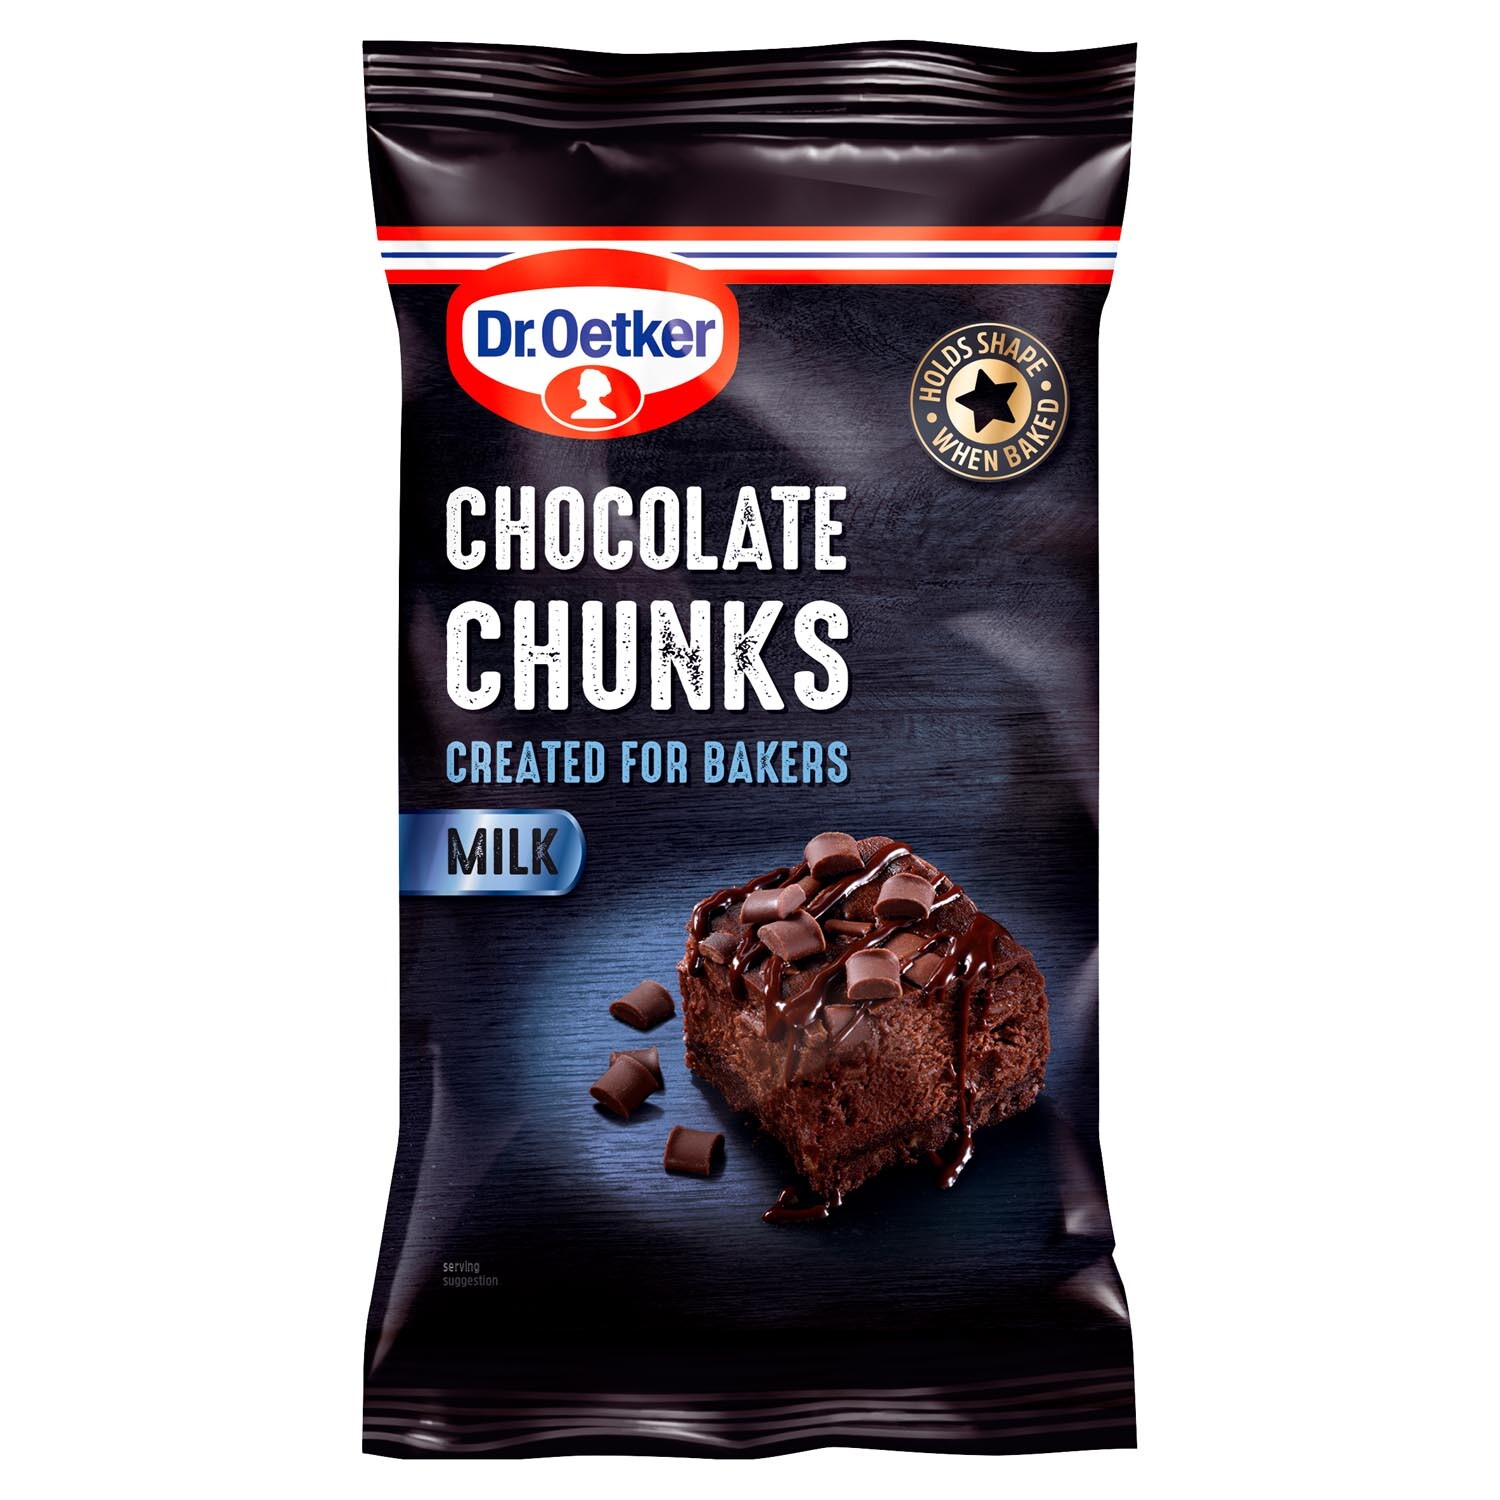 Dr. Oetker Chocolate Chunks - Milk Chocolate Image